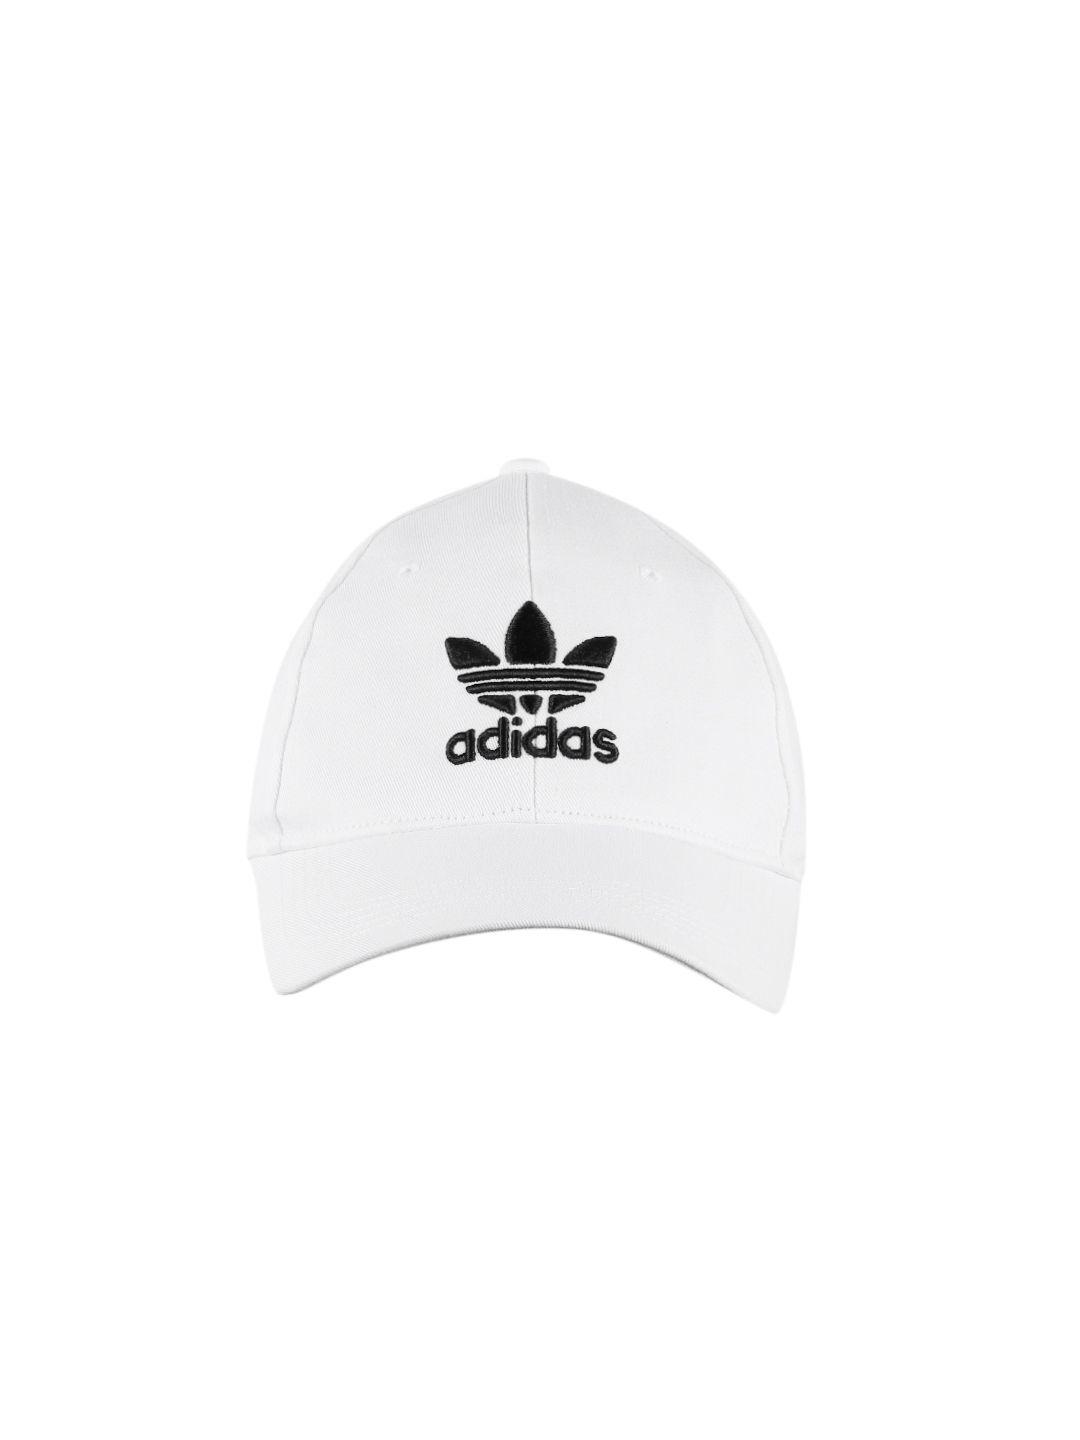 adidas-originals-unisex-cotton-brand-logo-embroidered-trefoil-baseball-cap